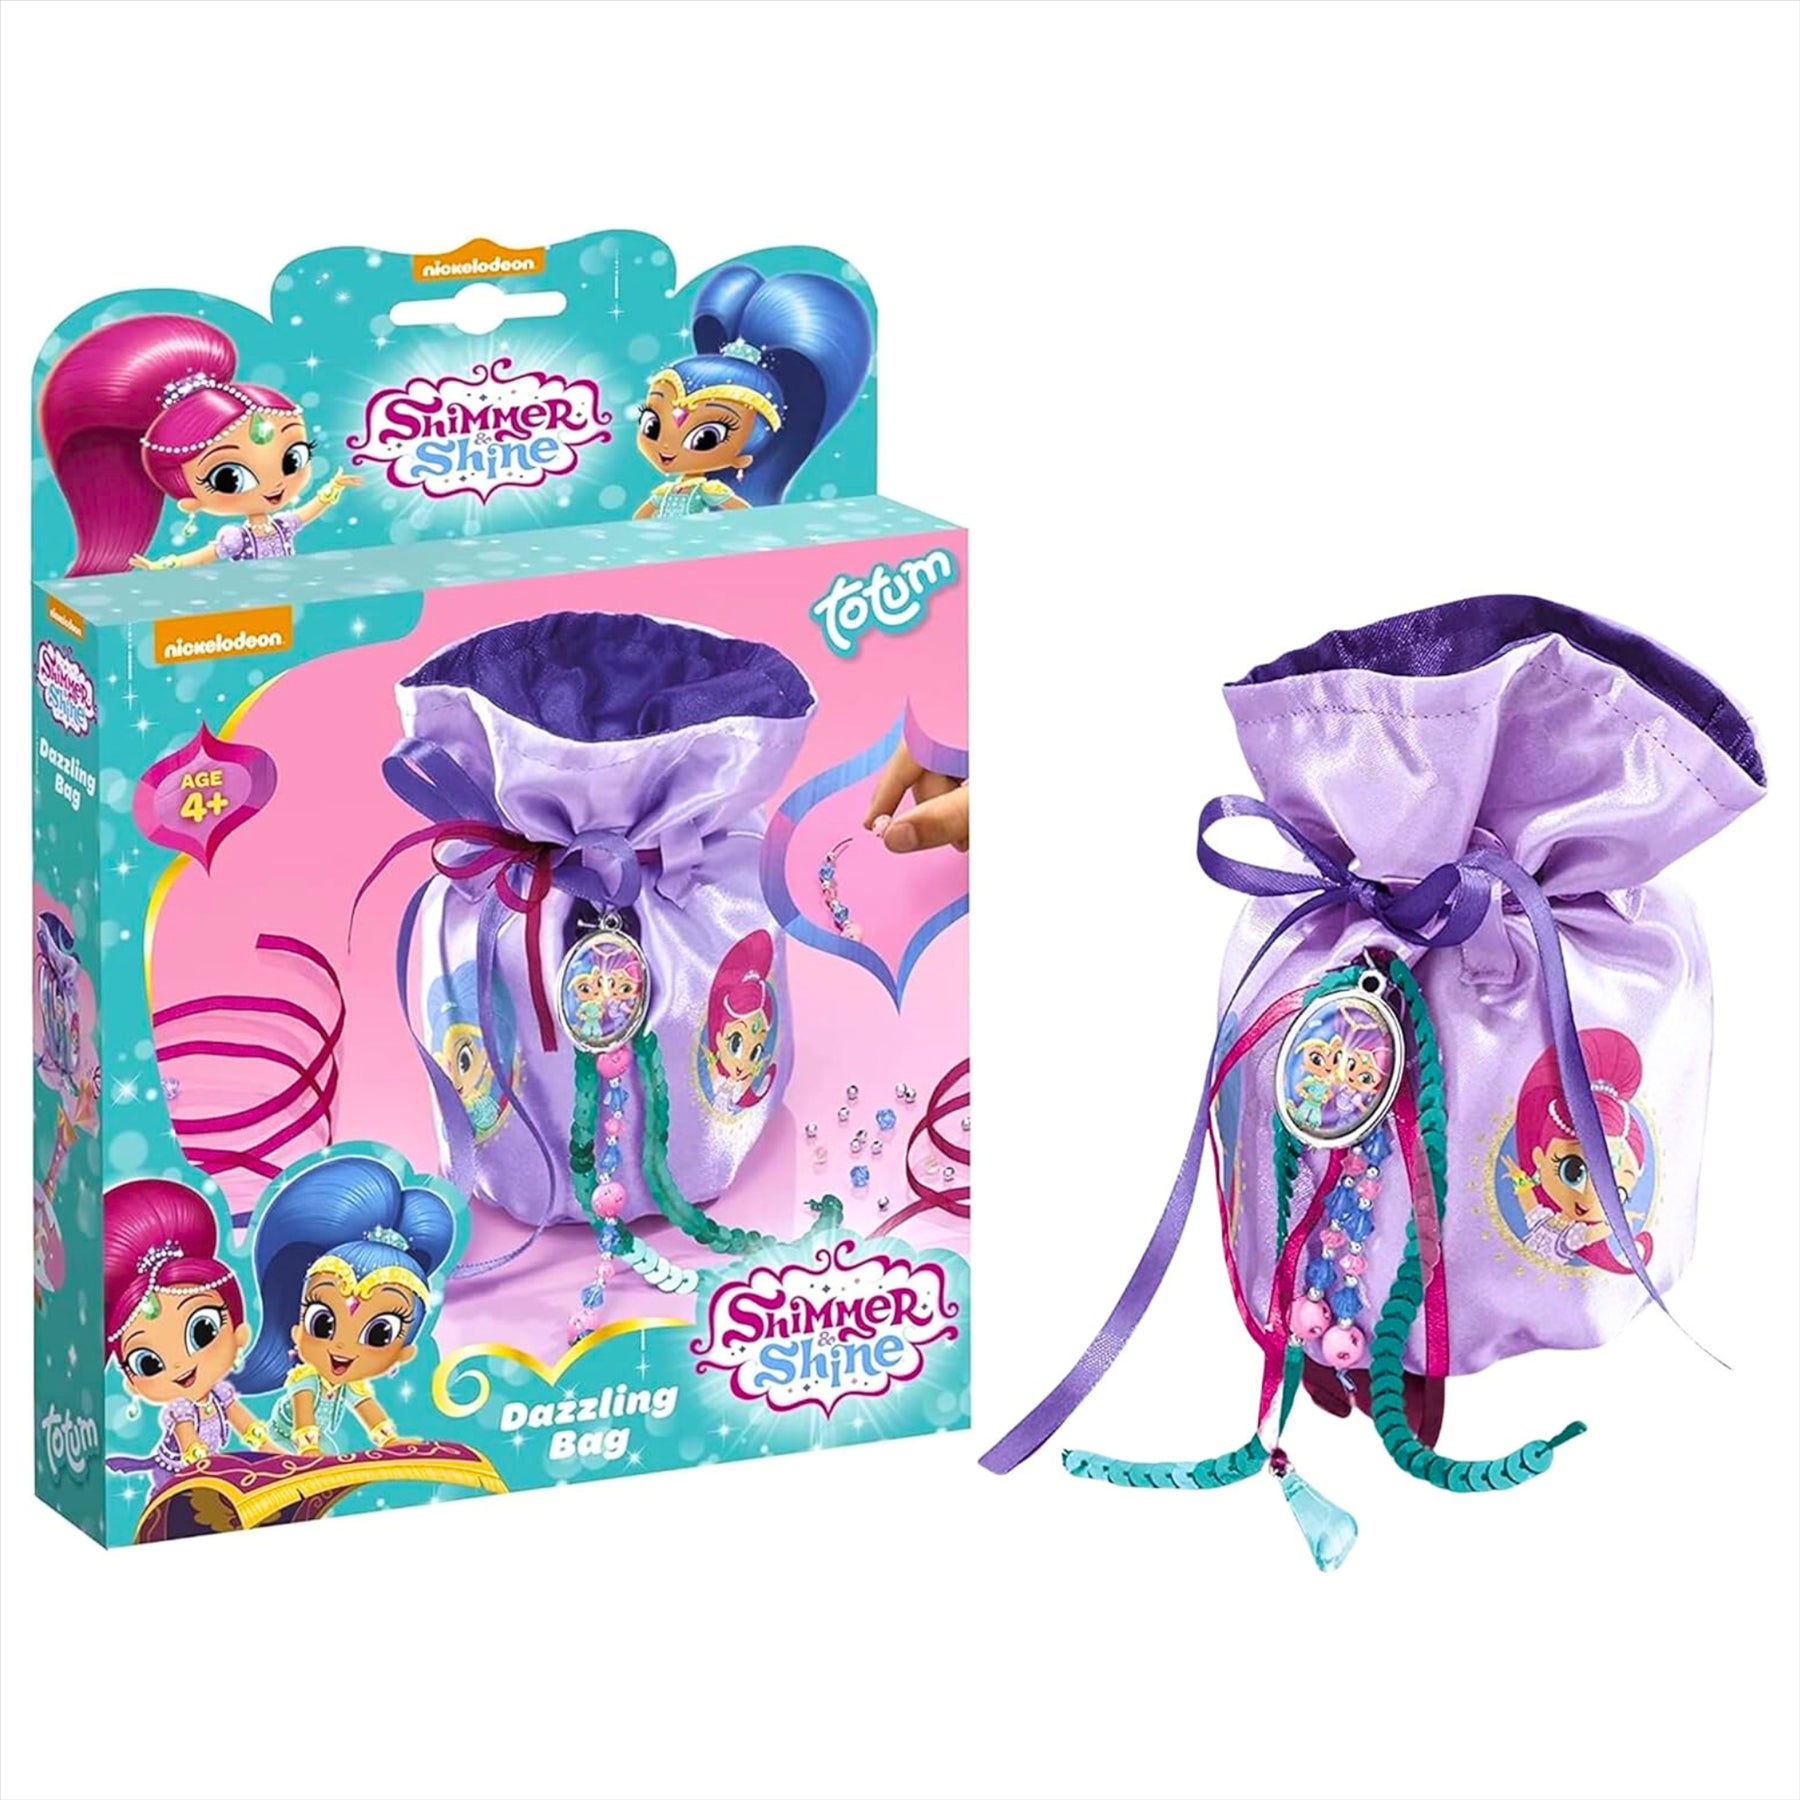 Shimmer and Shine 6 Piece Toy Teenie Genies Playset and Dazzling Bag Bundle - Toptoys2u